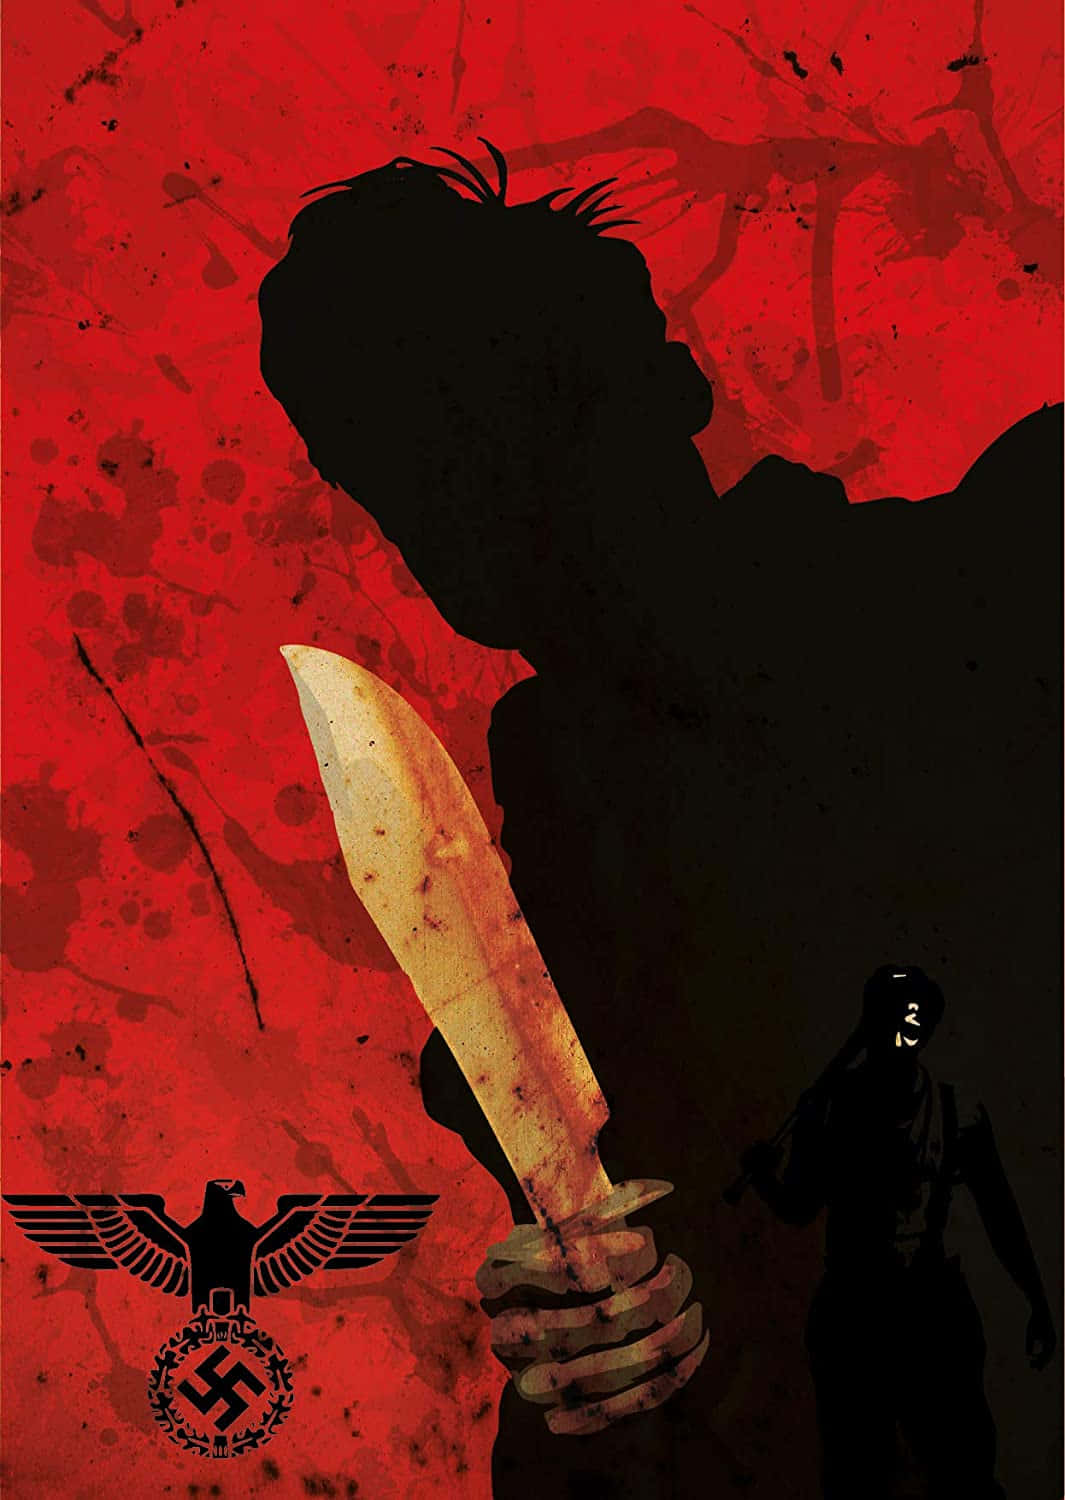 Tarantino Inspired Red Silhouette Artwork